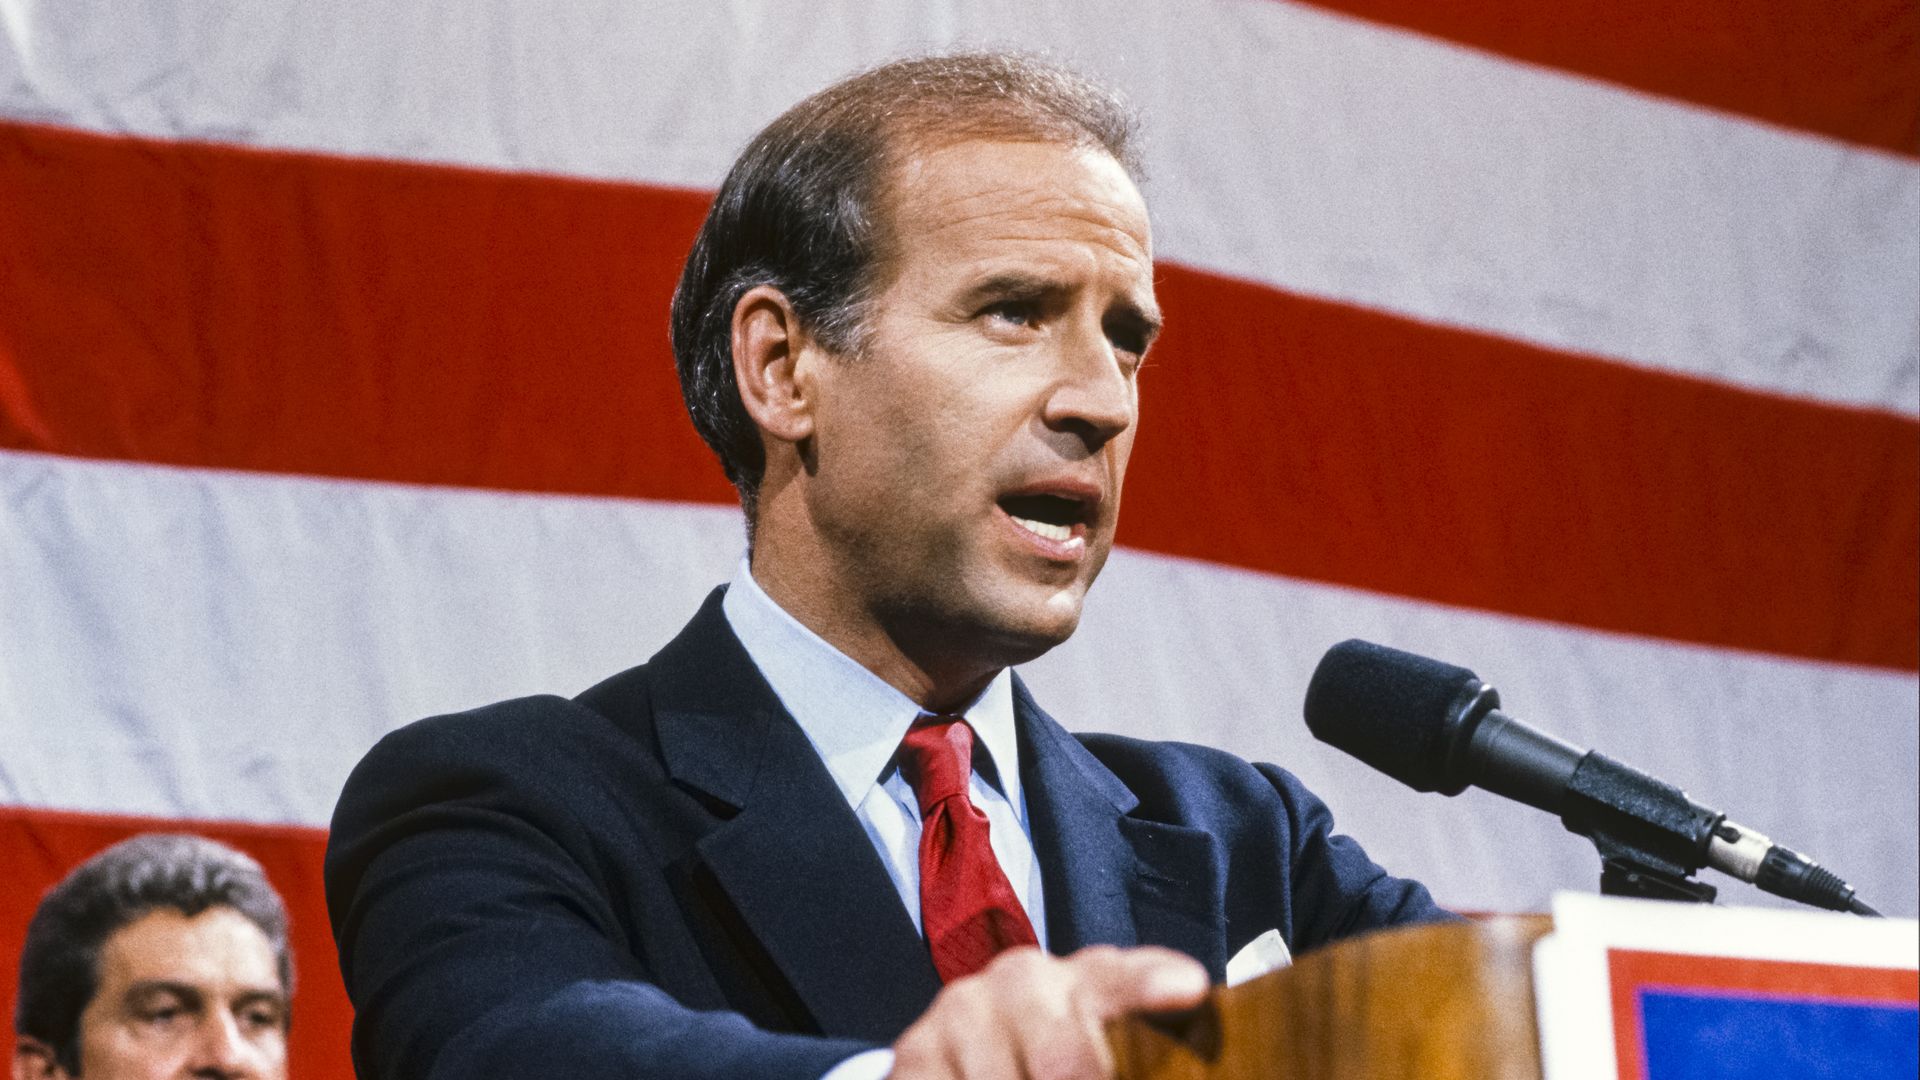 Joe Biden is seen announcing his first run for the presidency in June 1987.